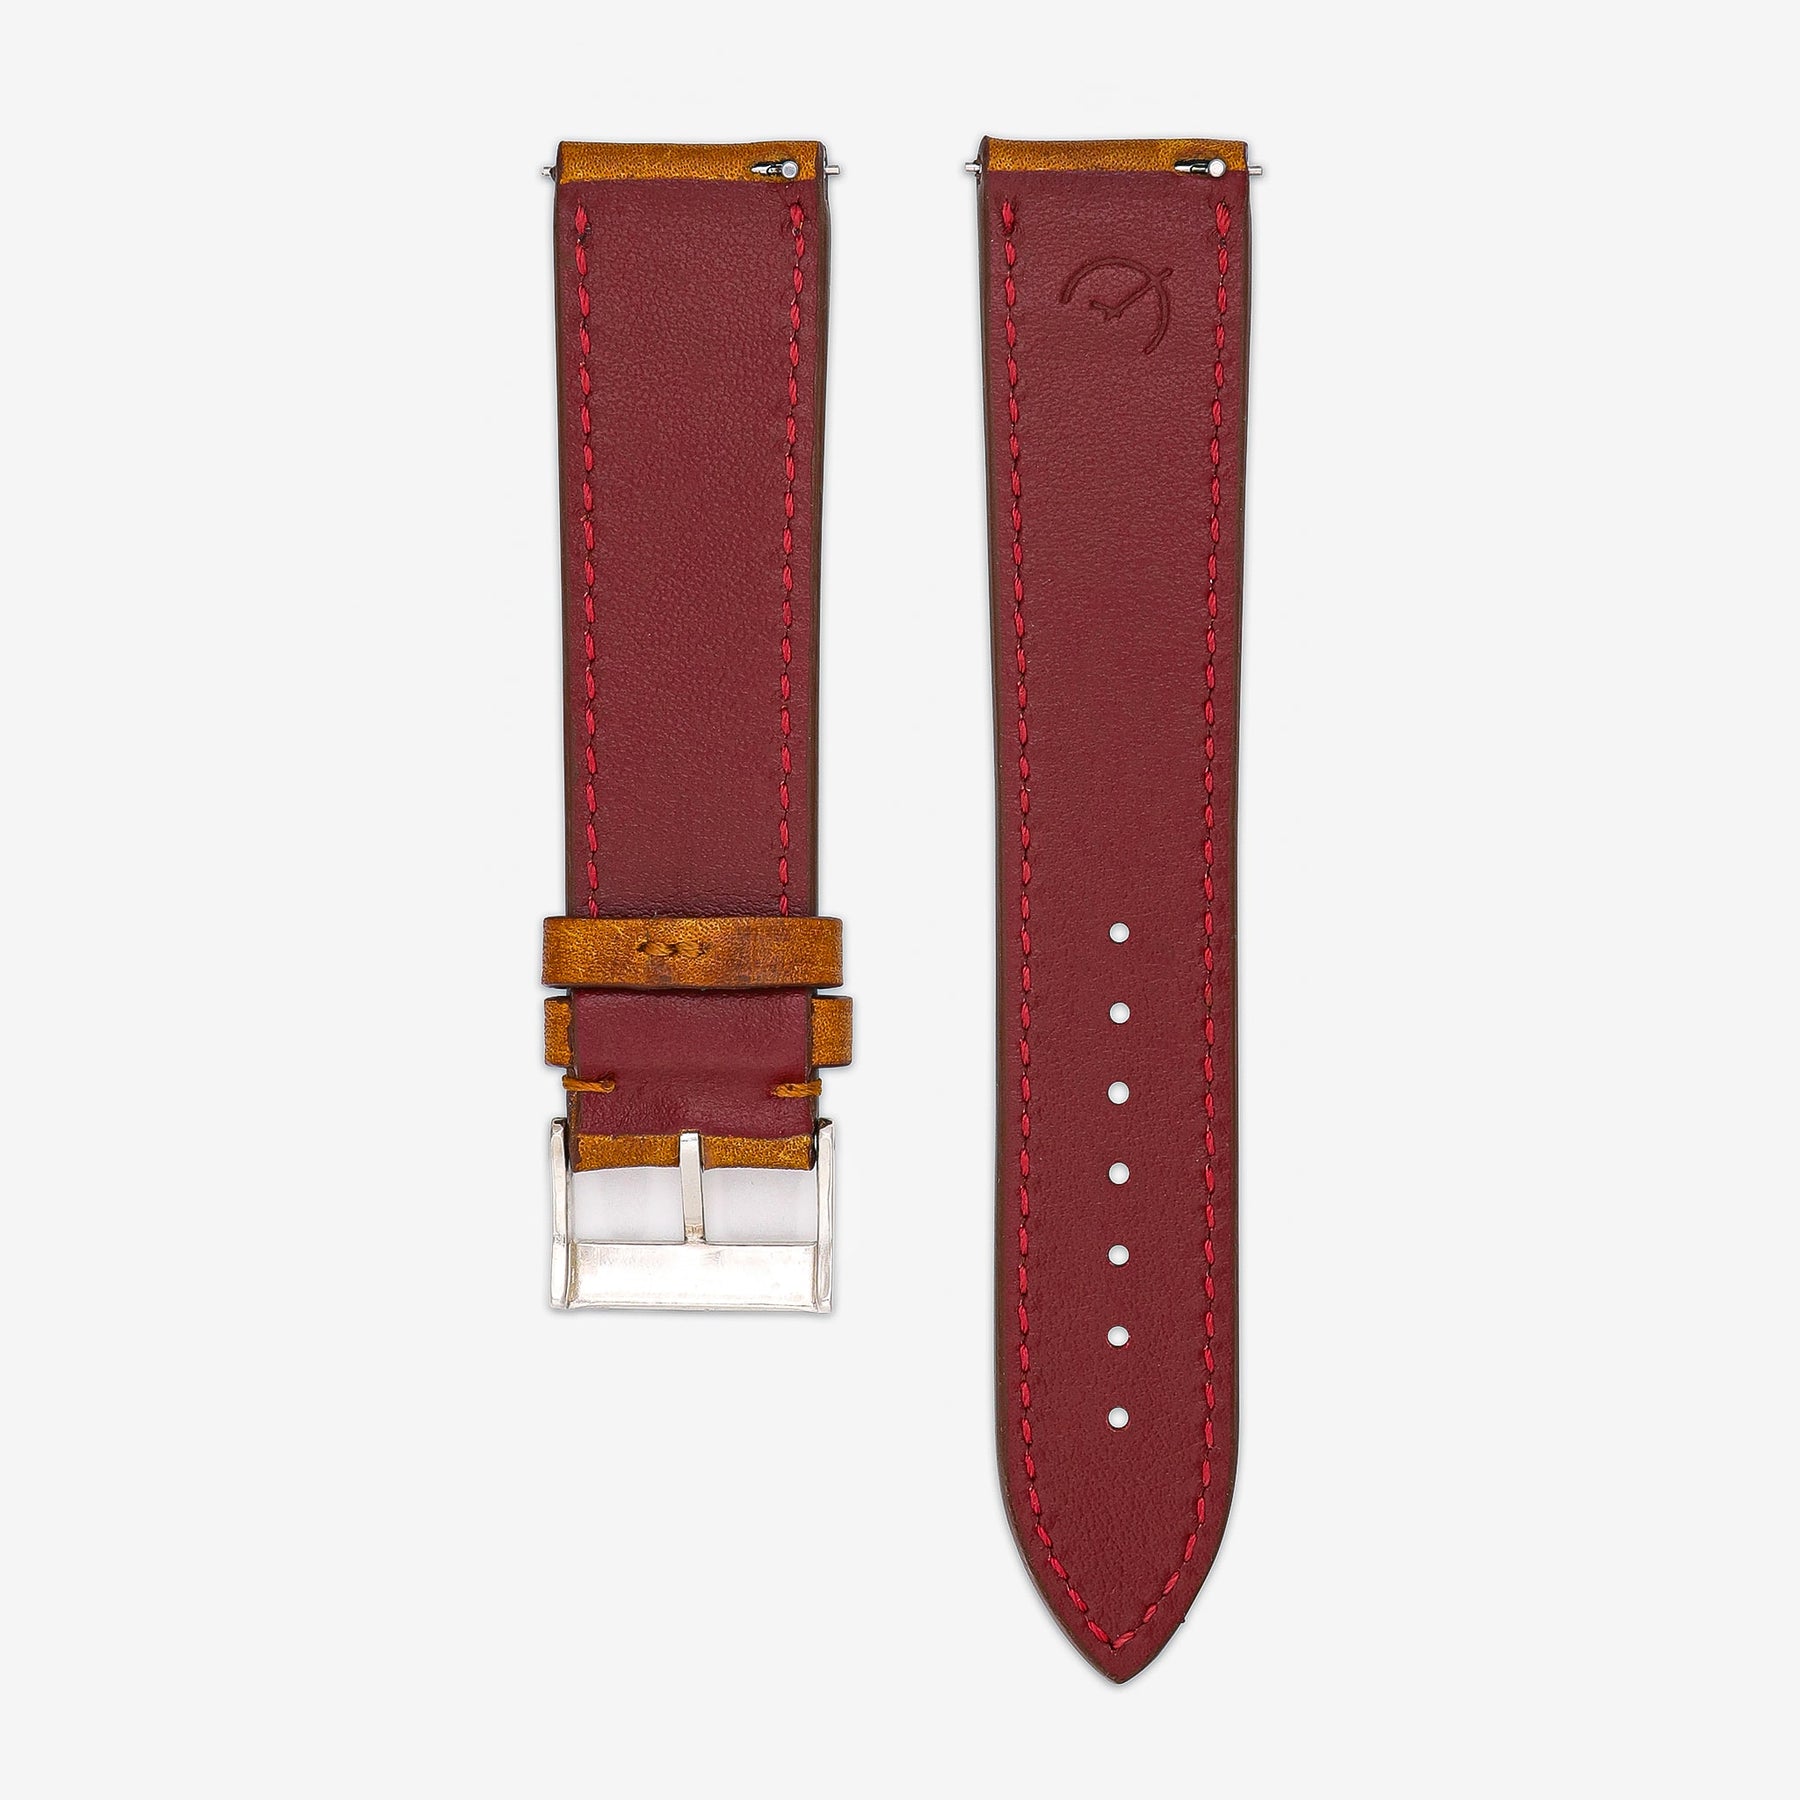 Caramello: Caramel-colored Kudu leather strap